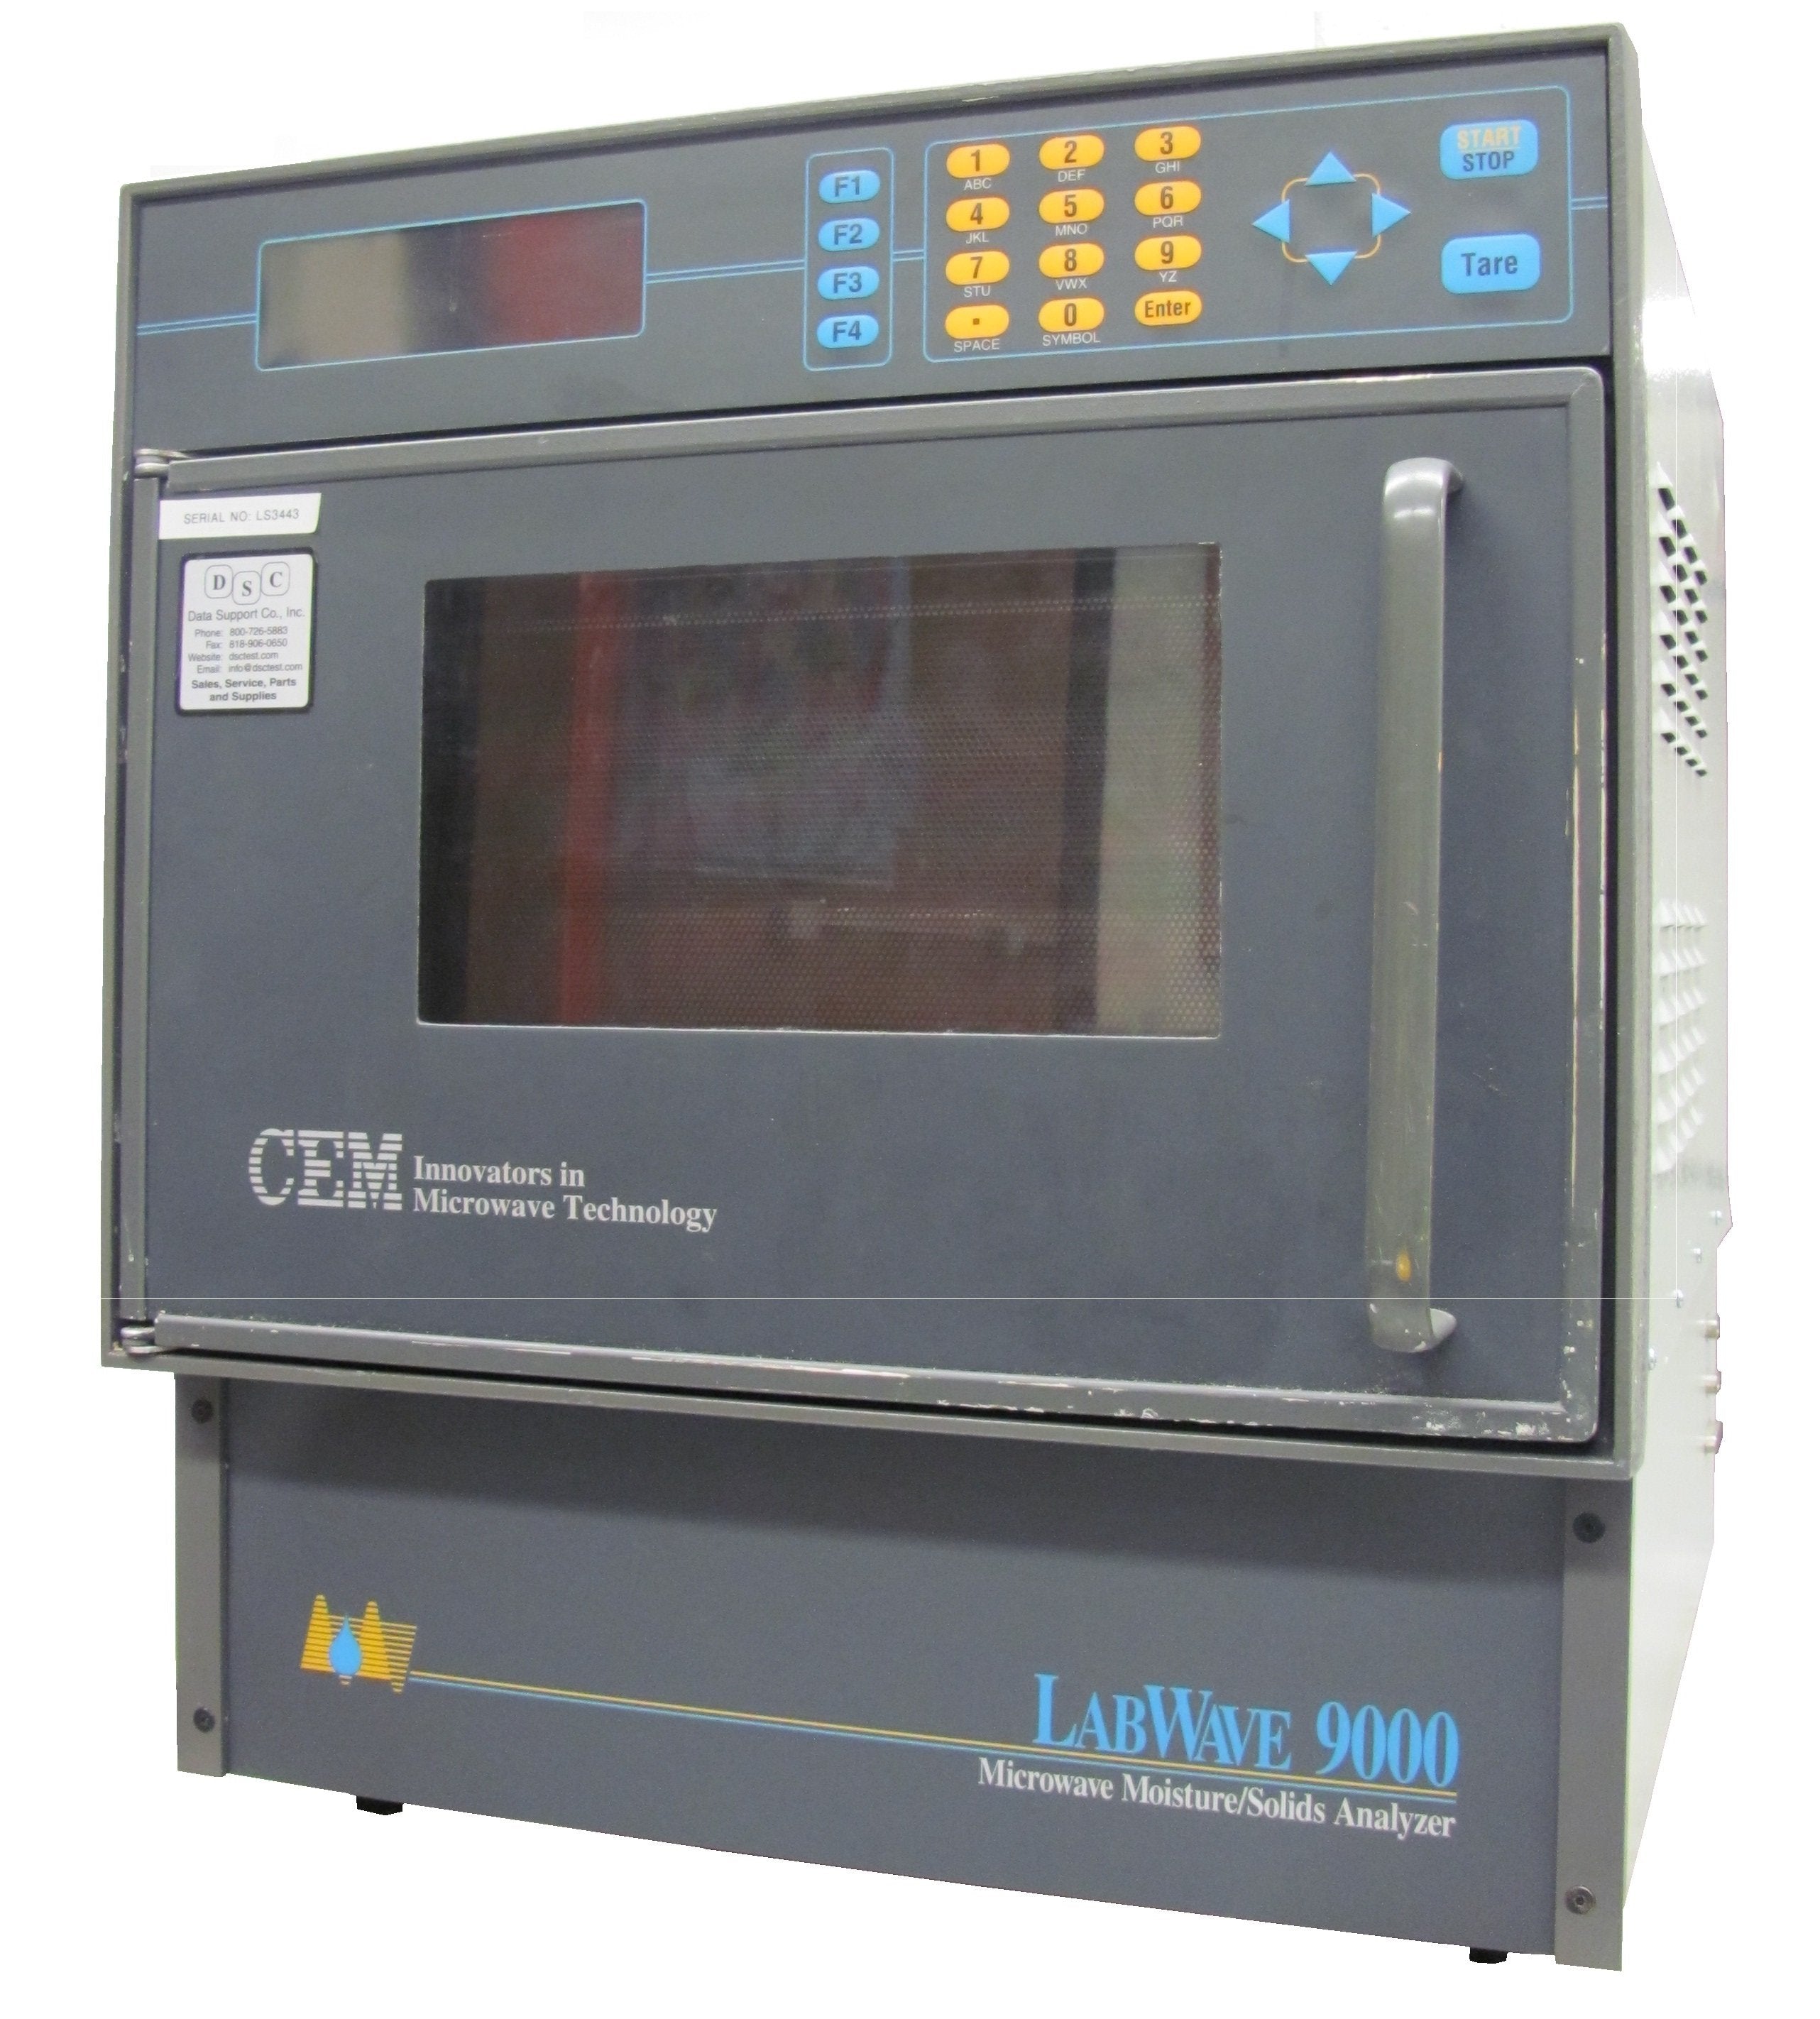 Reconditioned CEM Labwave 9000 Microwave Moisture Analyzer